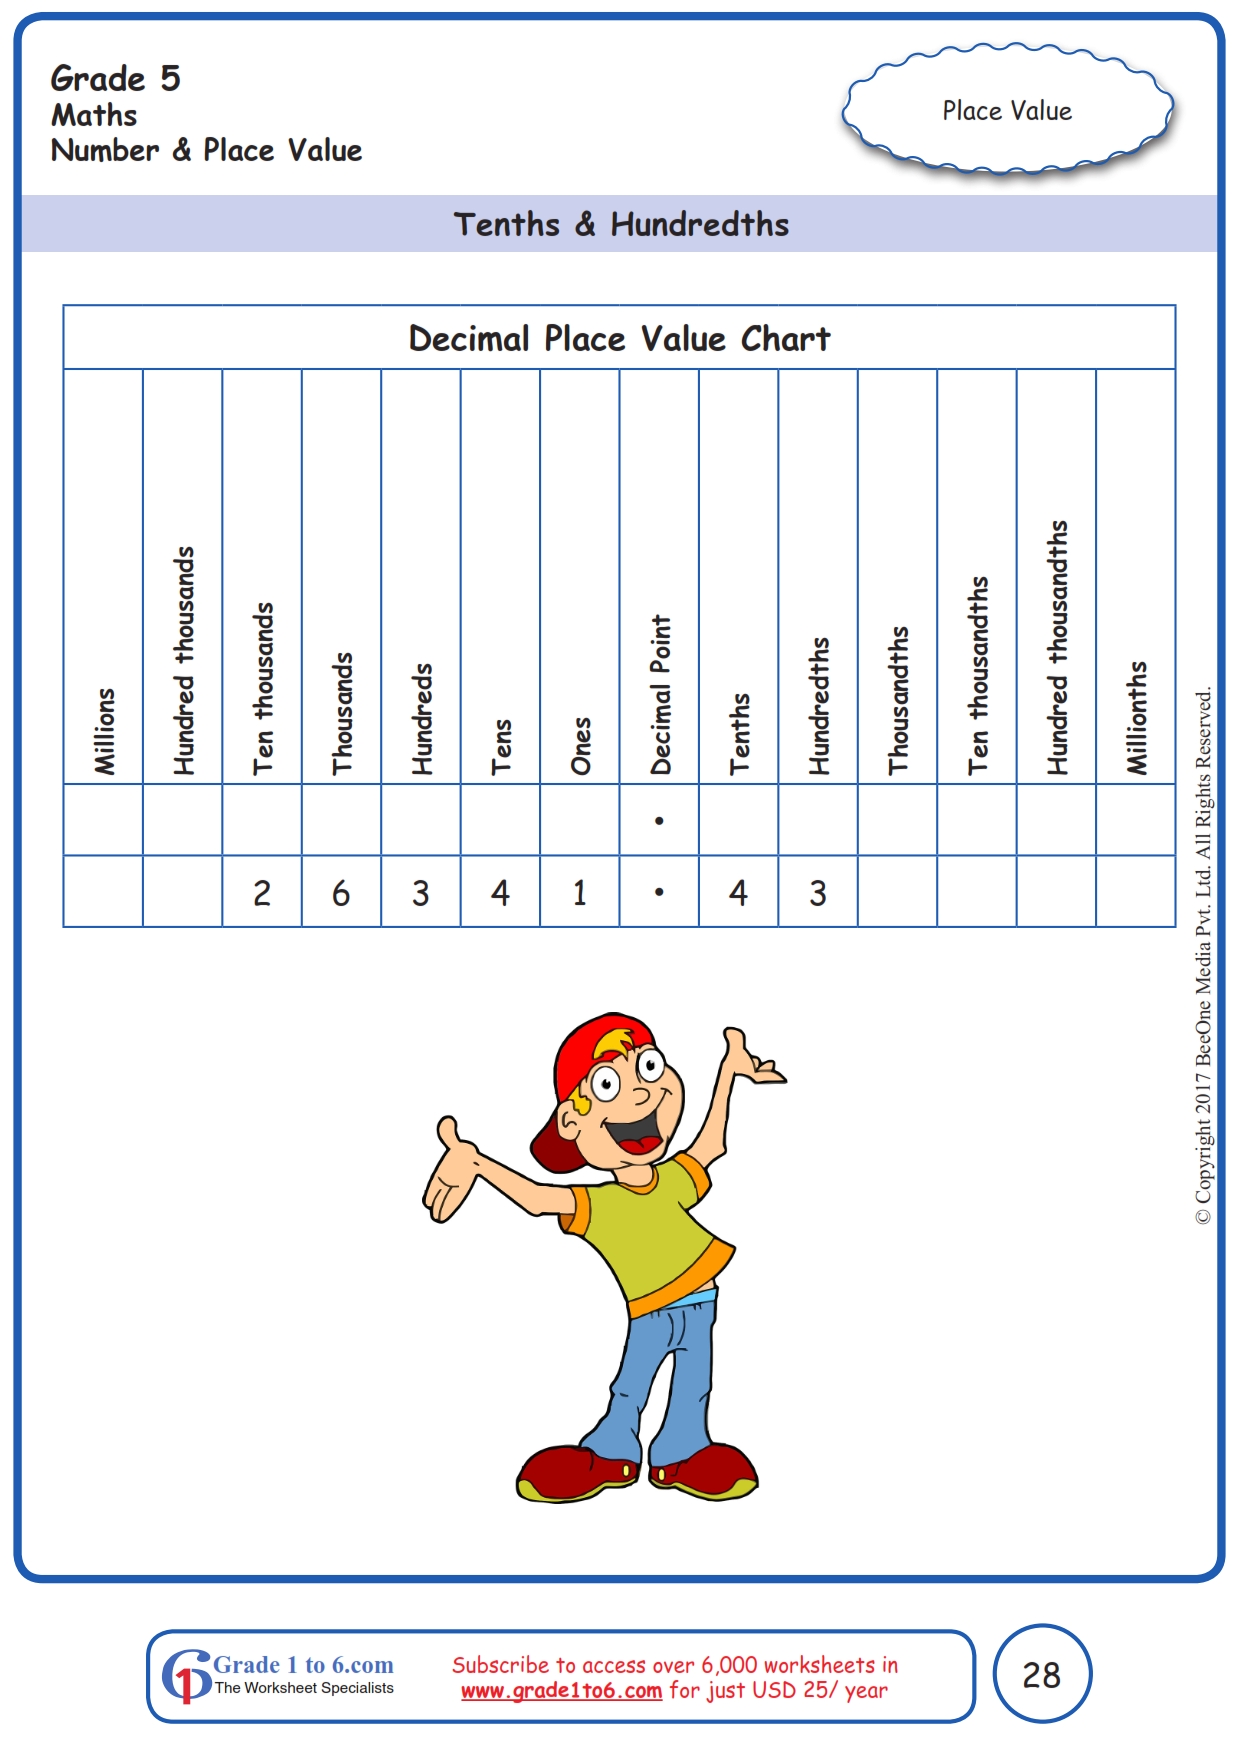 decimal place value worksheets grade 5 www grade1to6 com